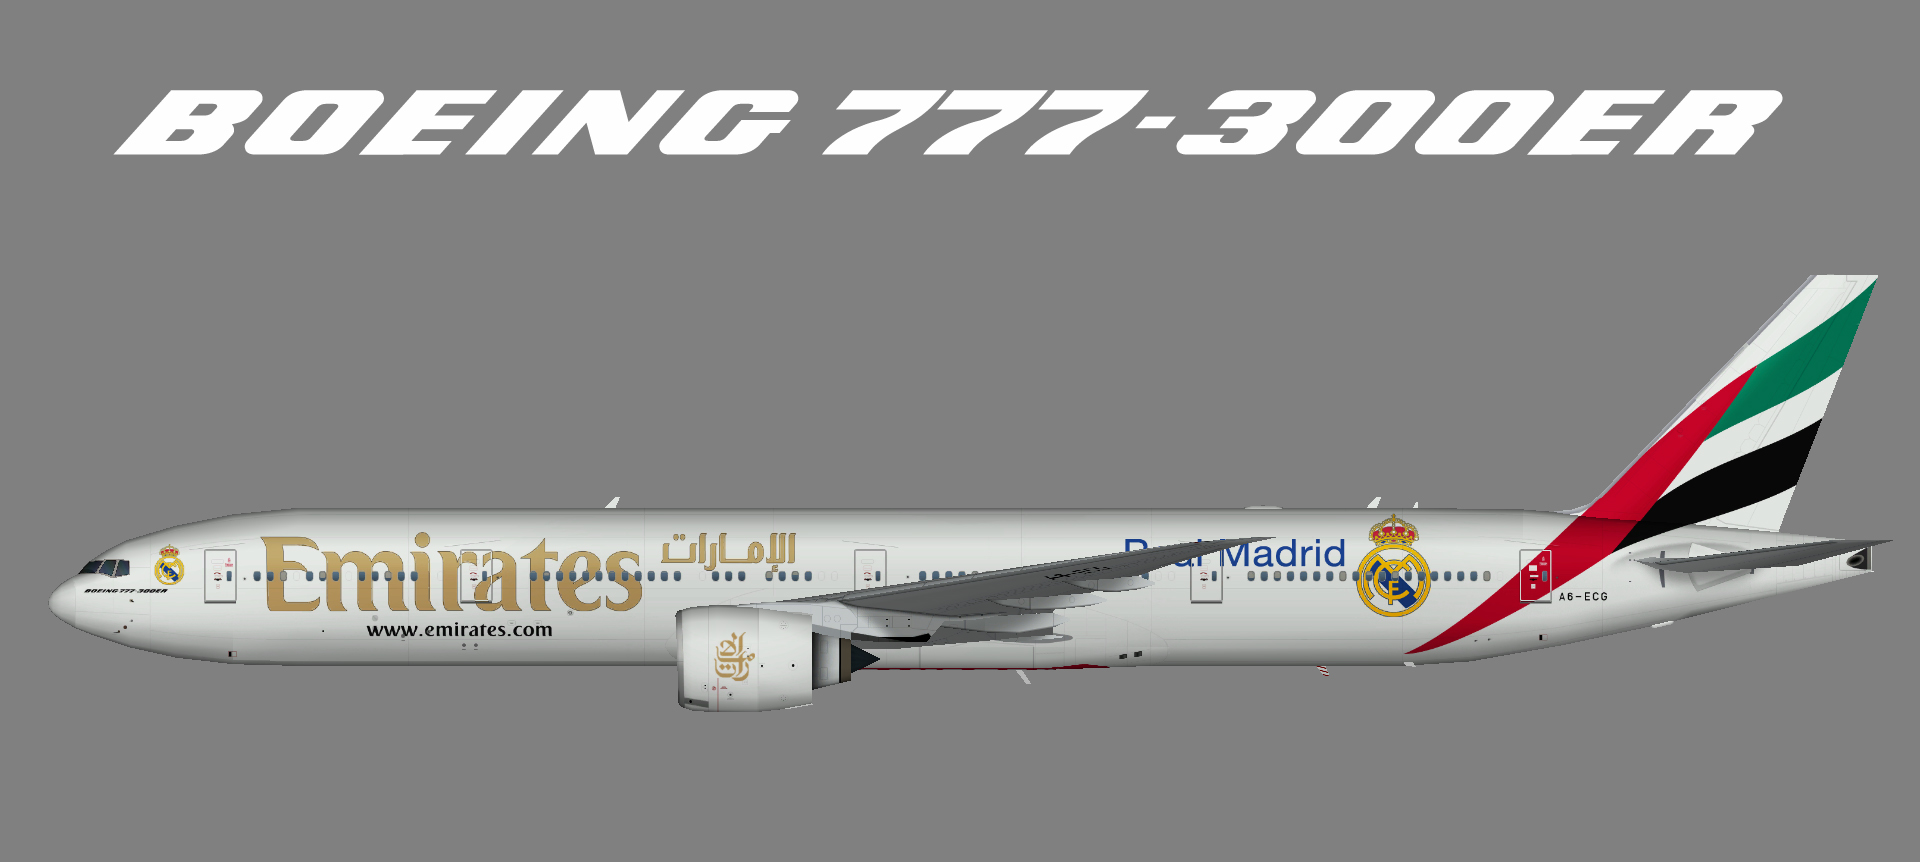 Emirates 777-300ER Real Madrid